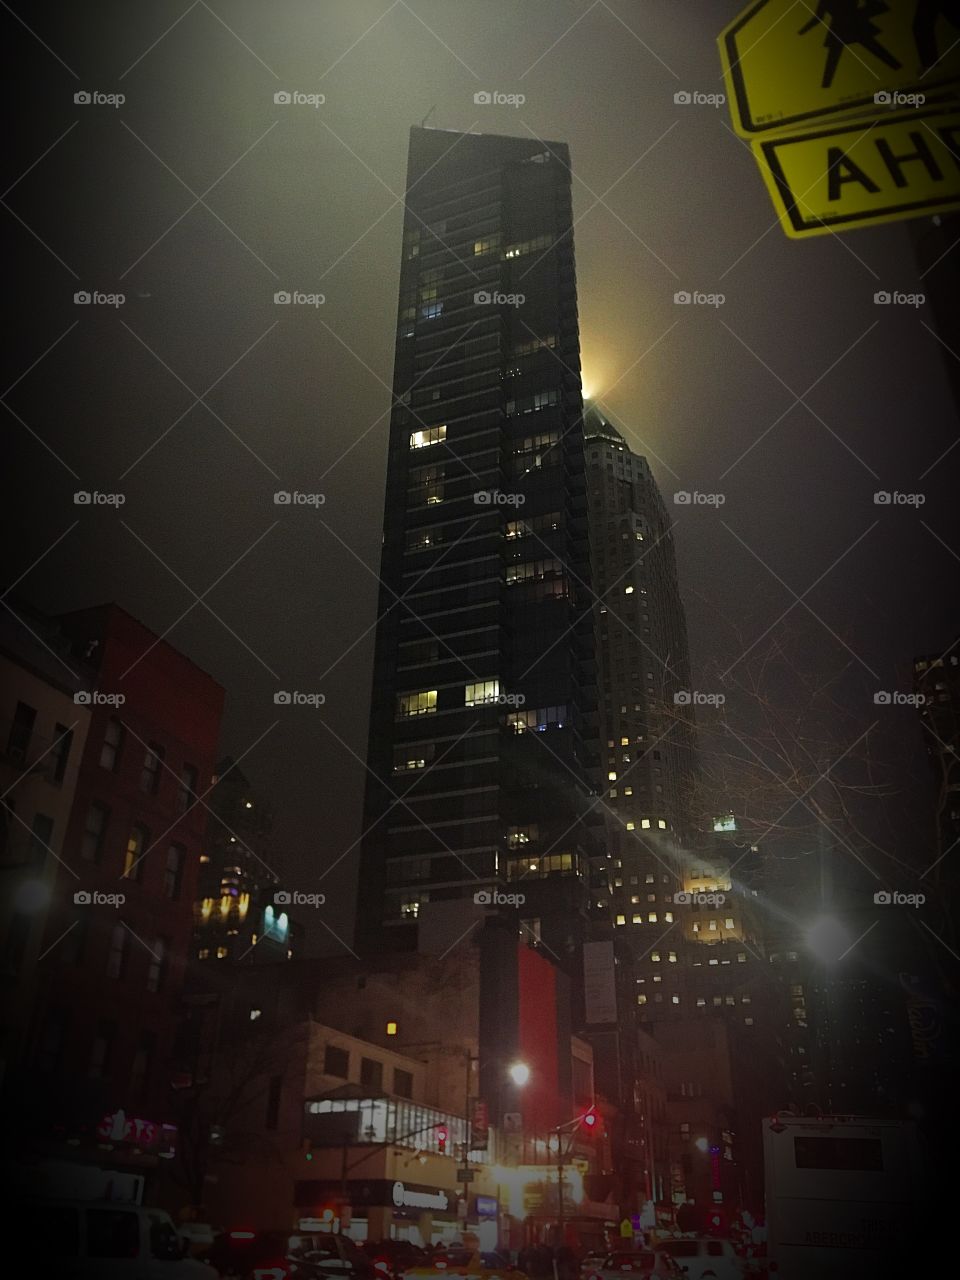 Foggy evening in New York City